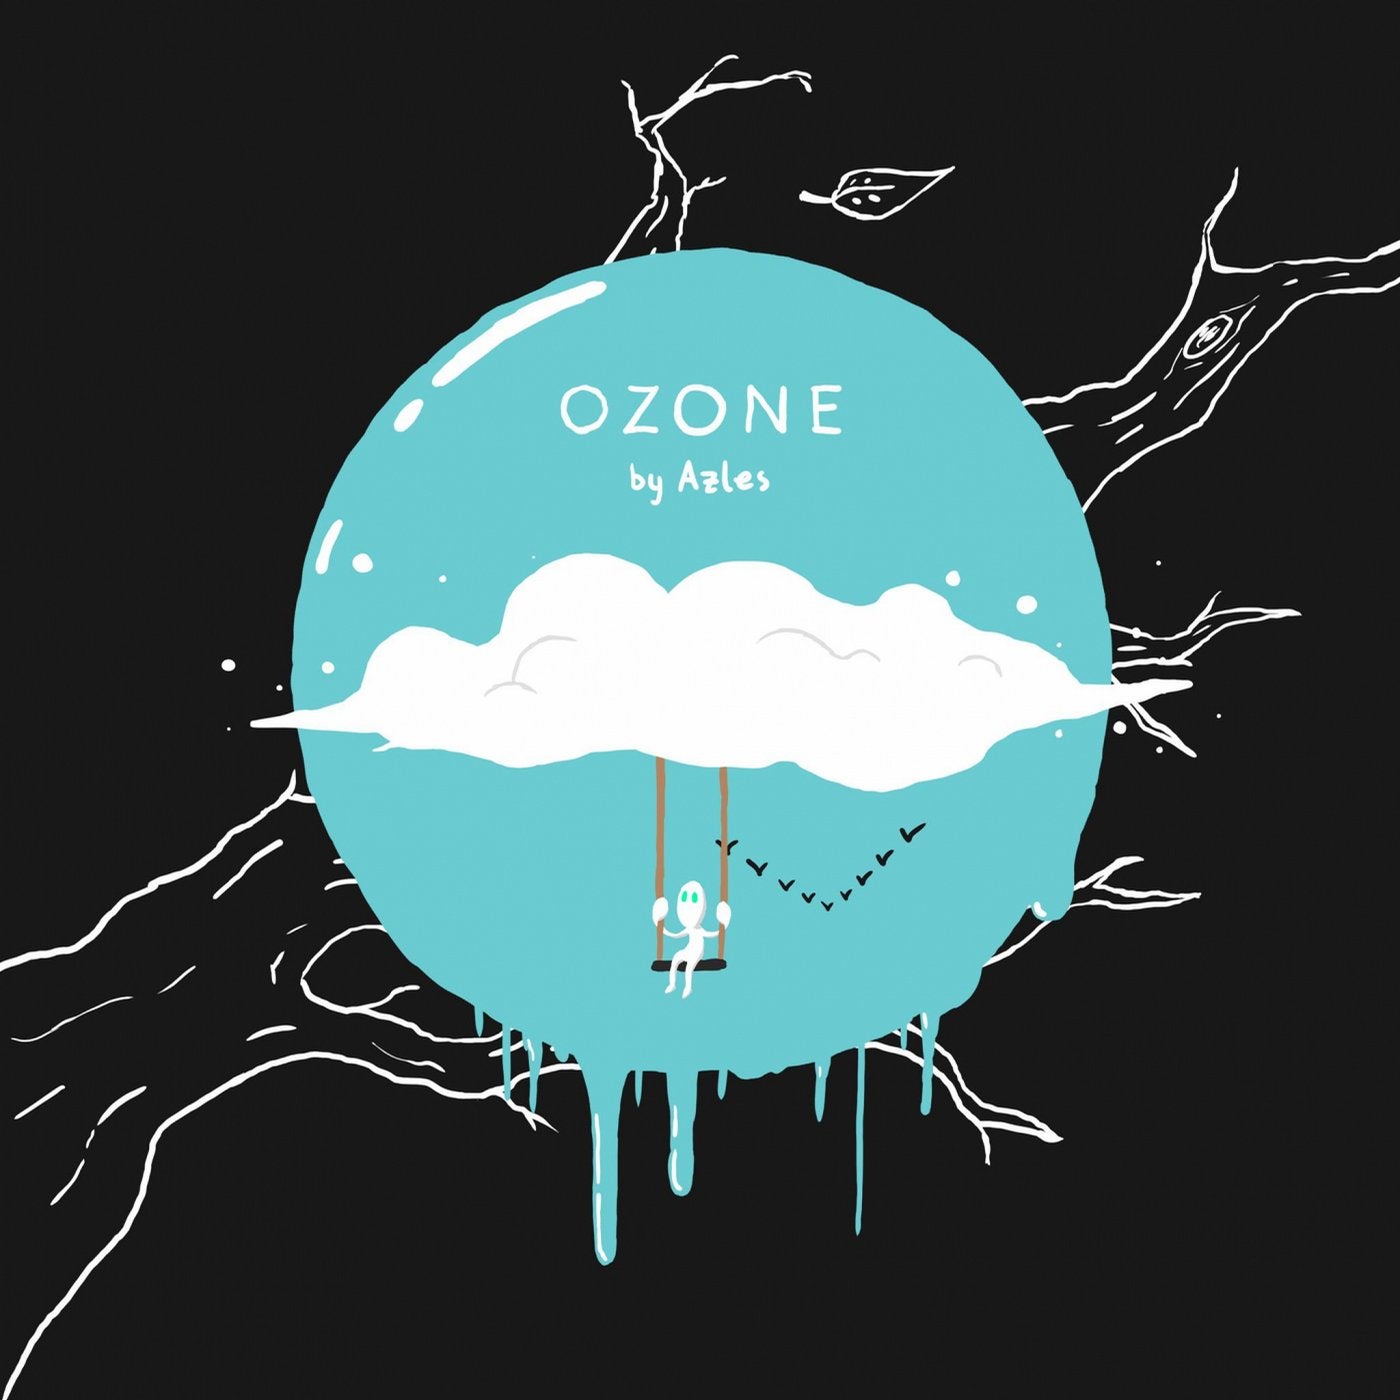 Ozone ai. Ozone альбомы. Ozone эскиз. Озон мелодия. Озон песни.